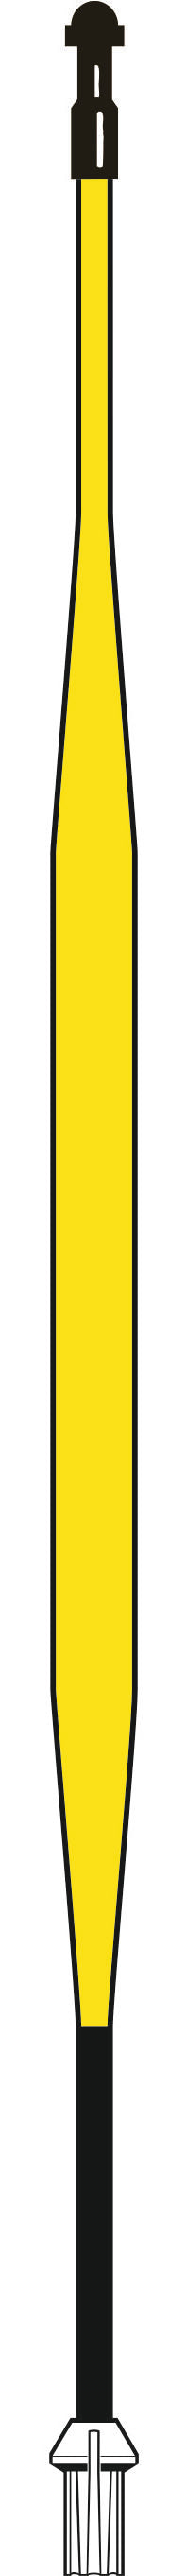 Tournament Flagstick 7.5' yellow + 1 black stripe